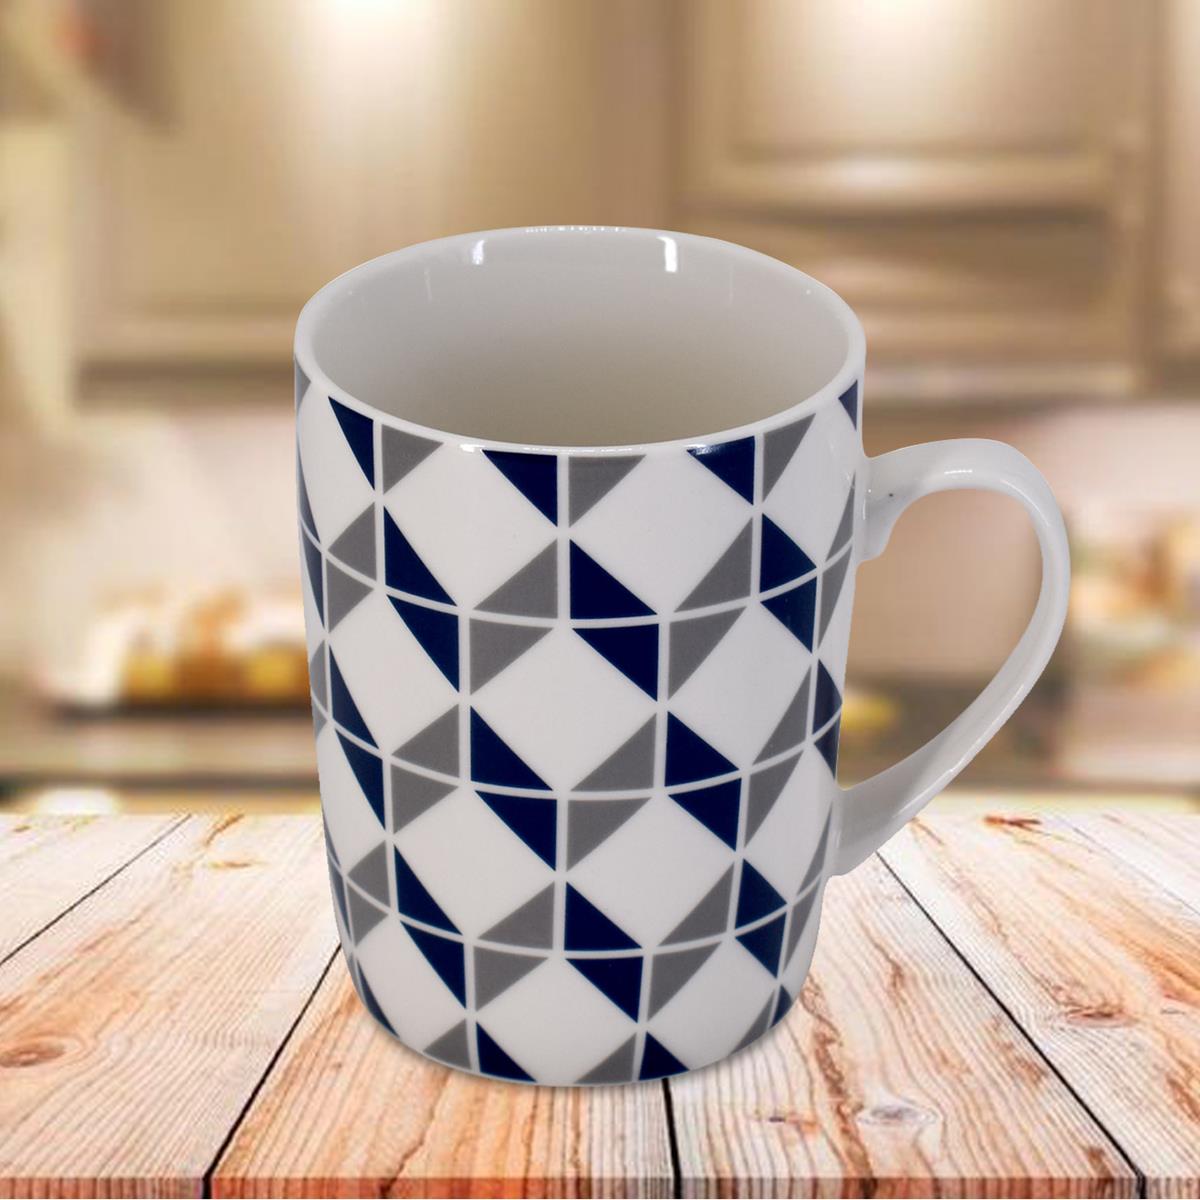 Printed Ceramic Coffee or Tea Mug with handle - 325ml (BPM3647-A)